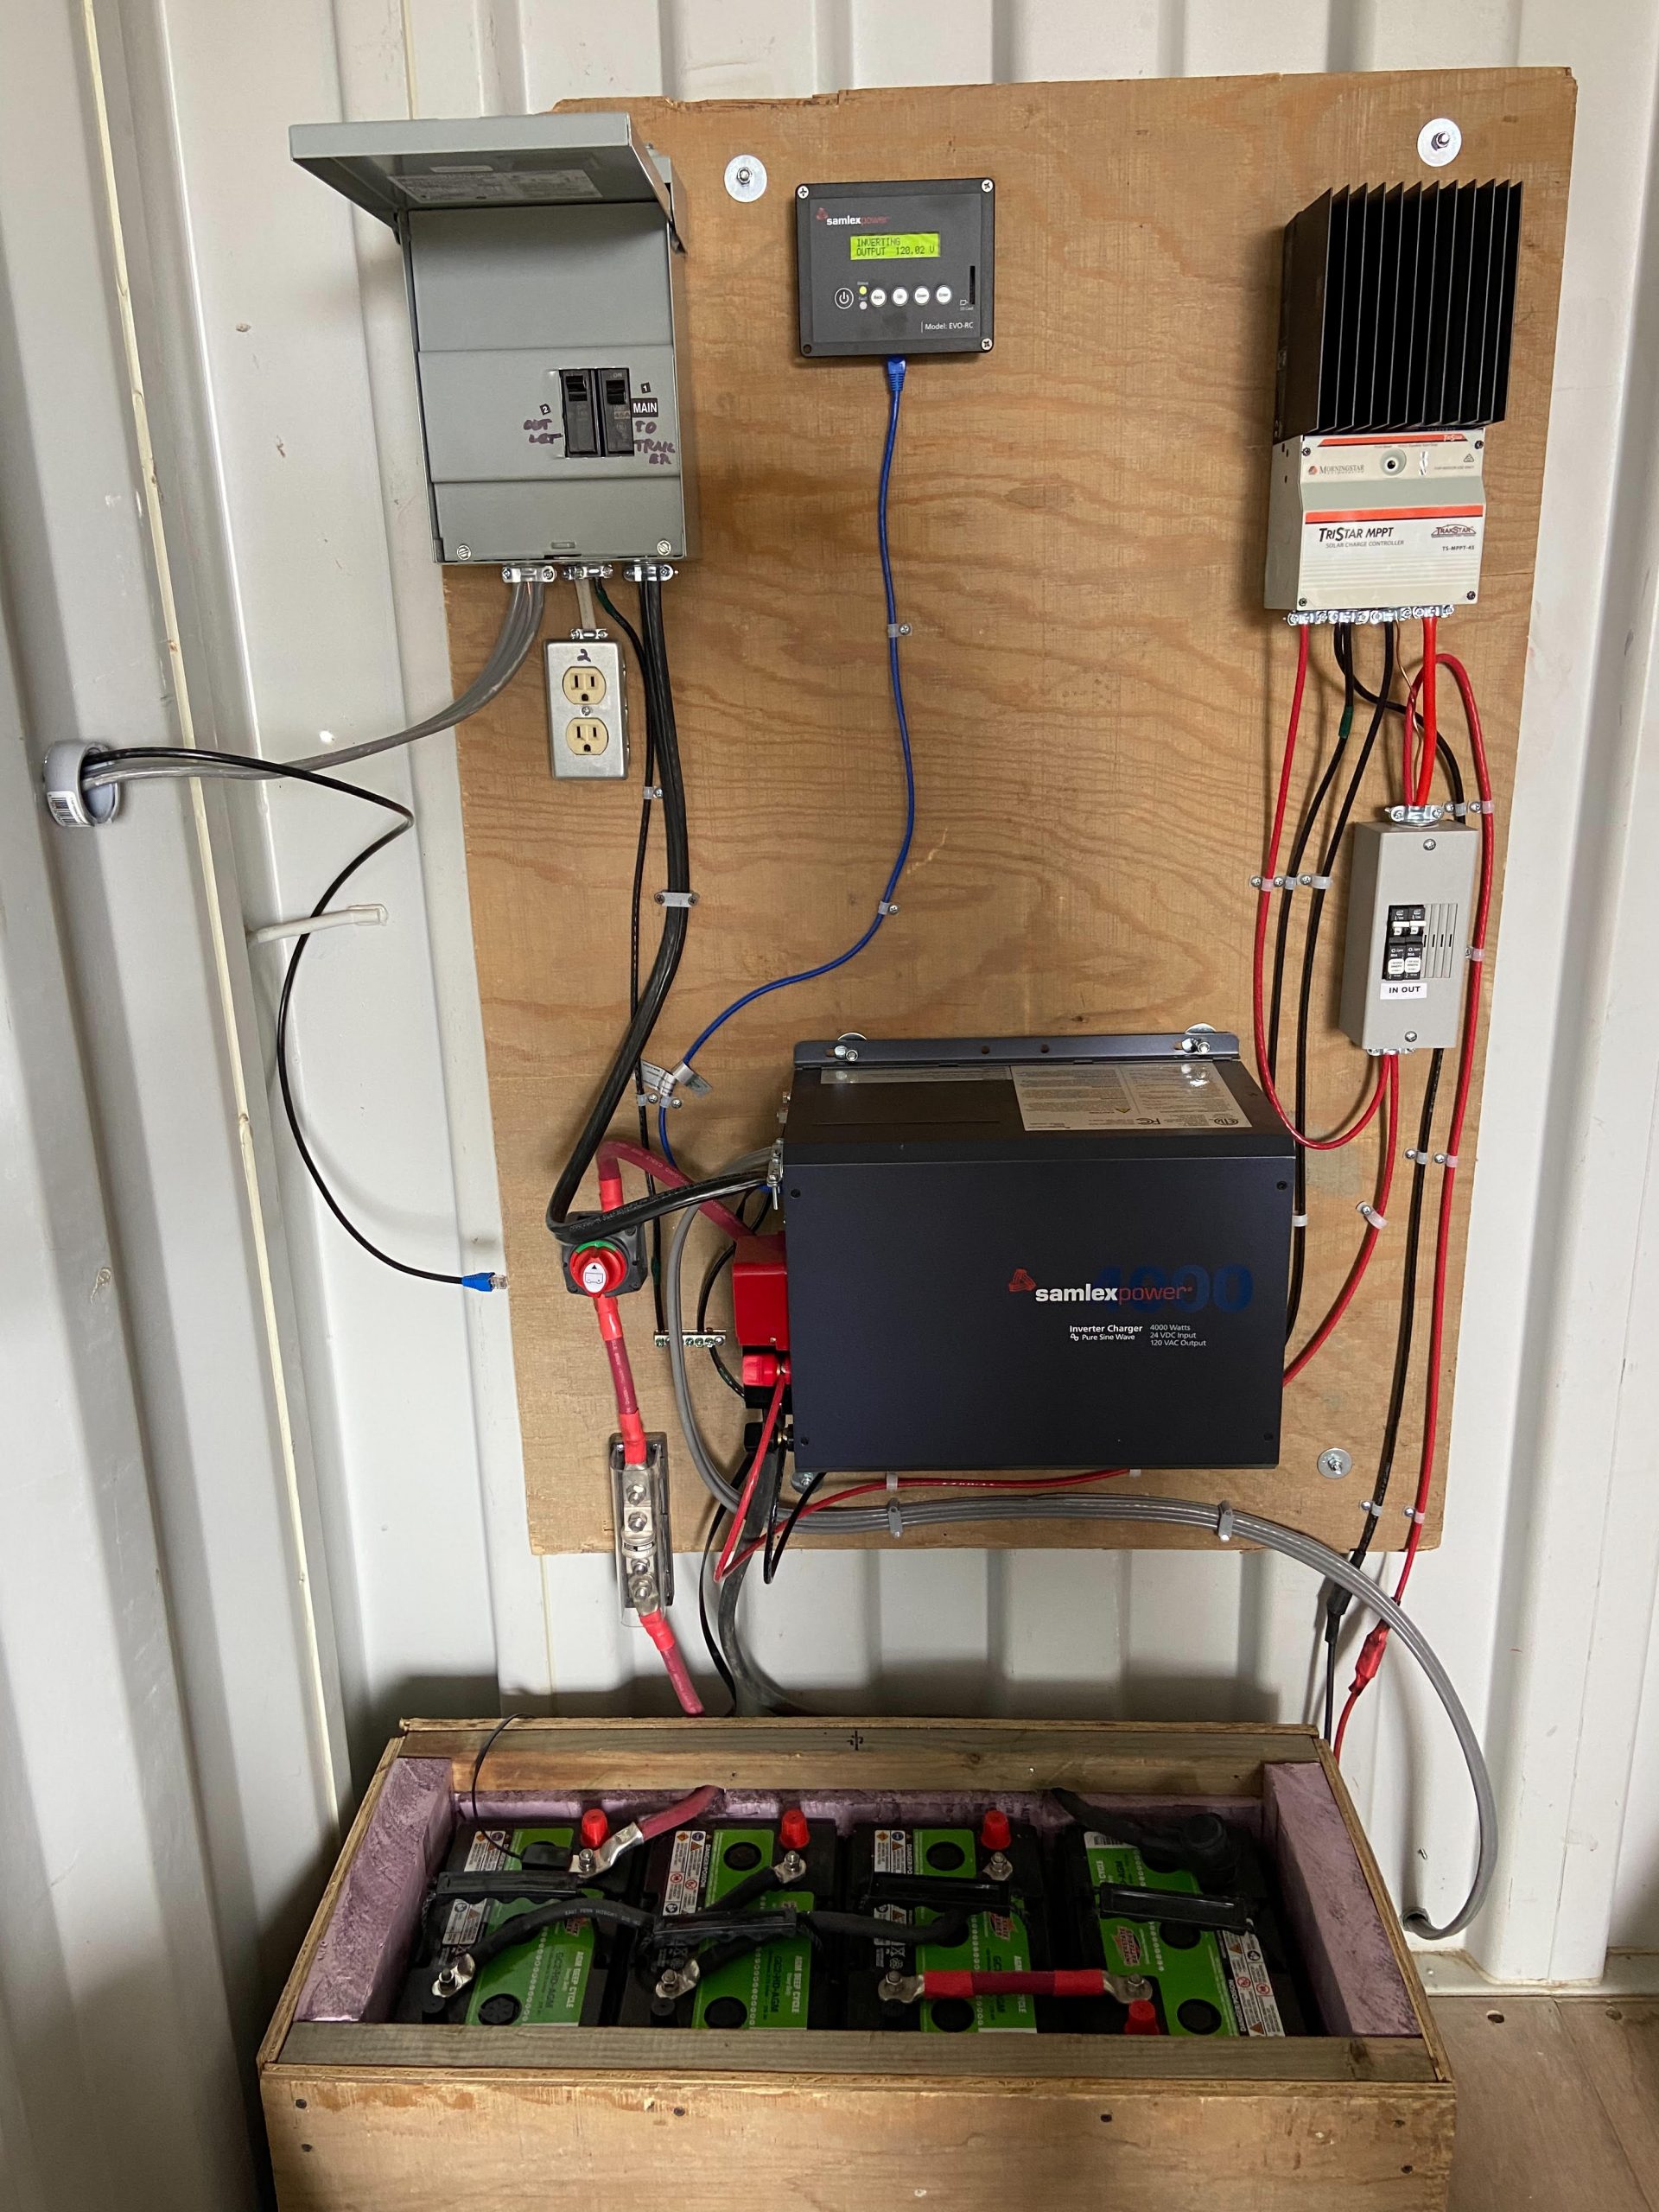 2000 watt off grid solar kit with Morningstar MPPT charge controller